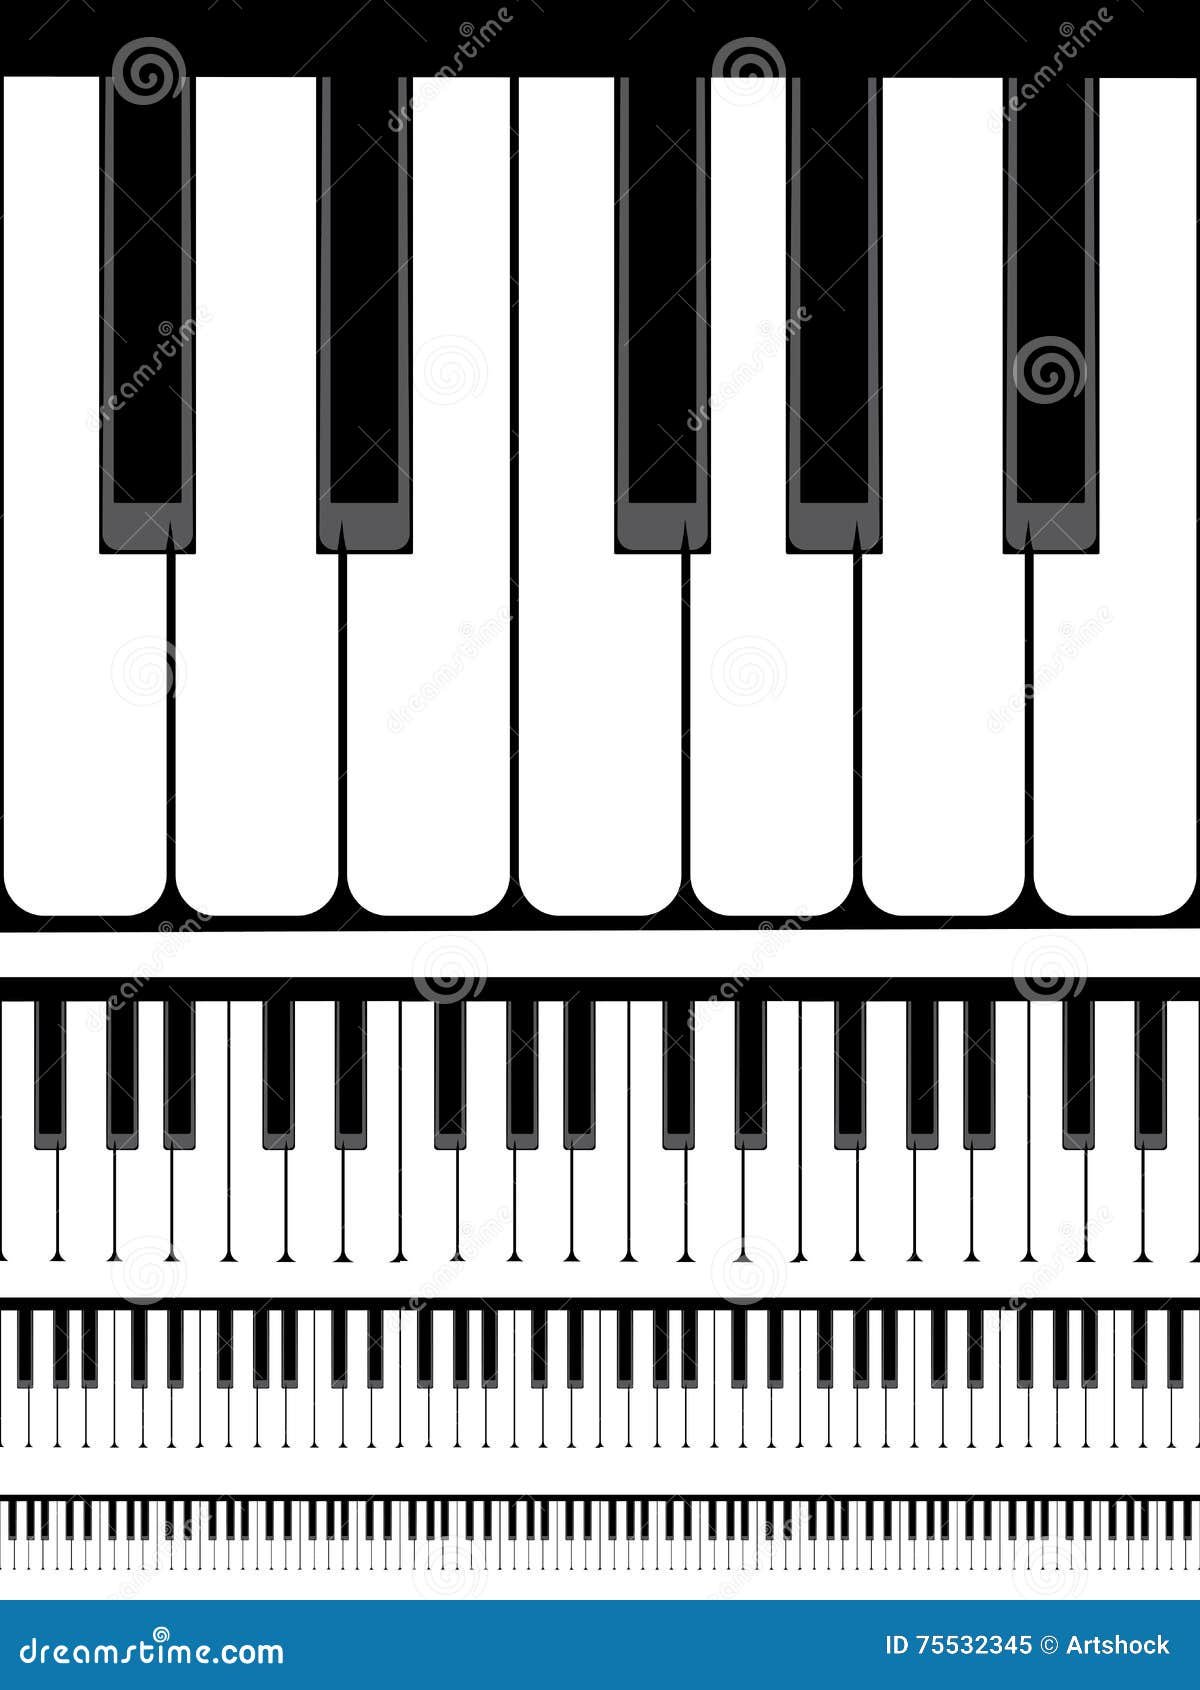 Piano Keyboard Illustration Stock Vector - Illustration of synth ...